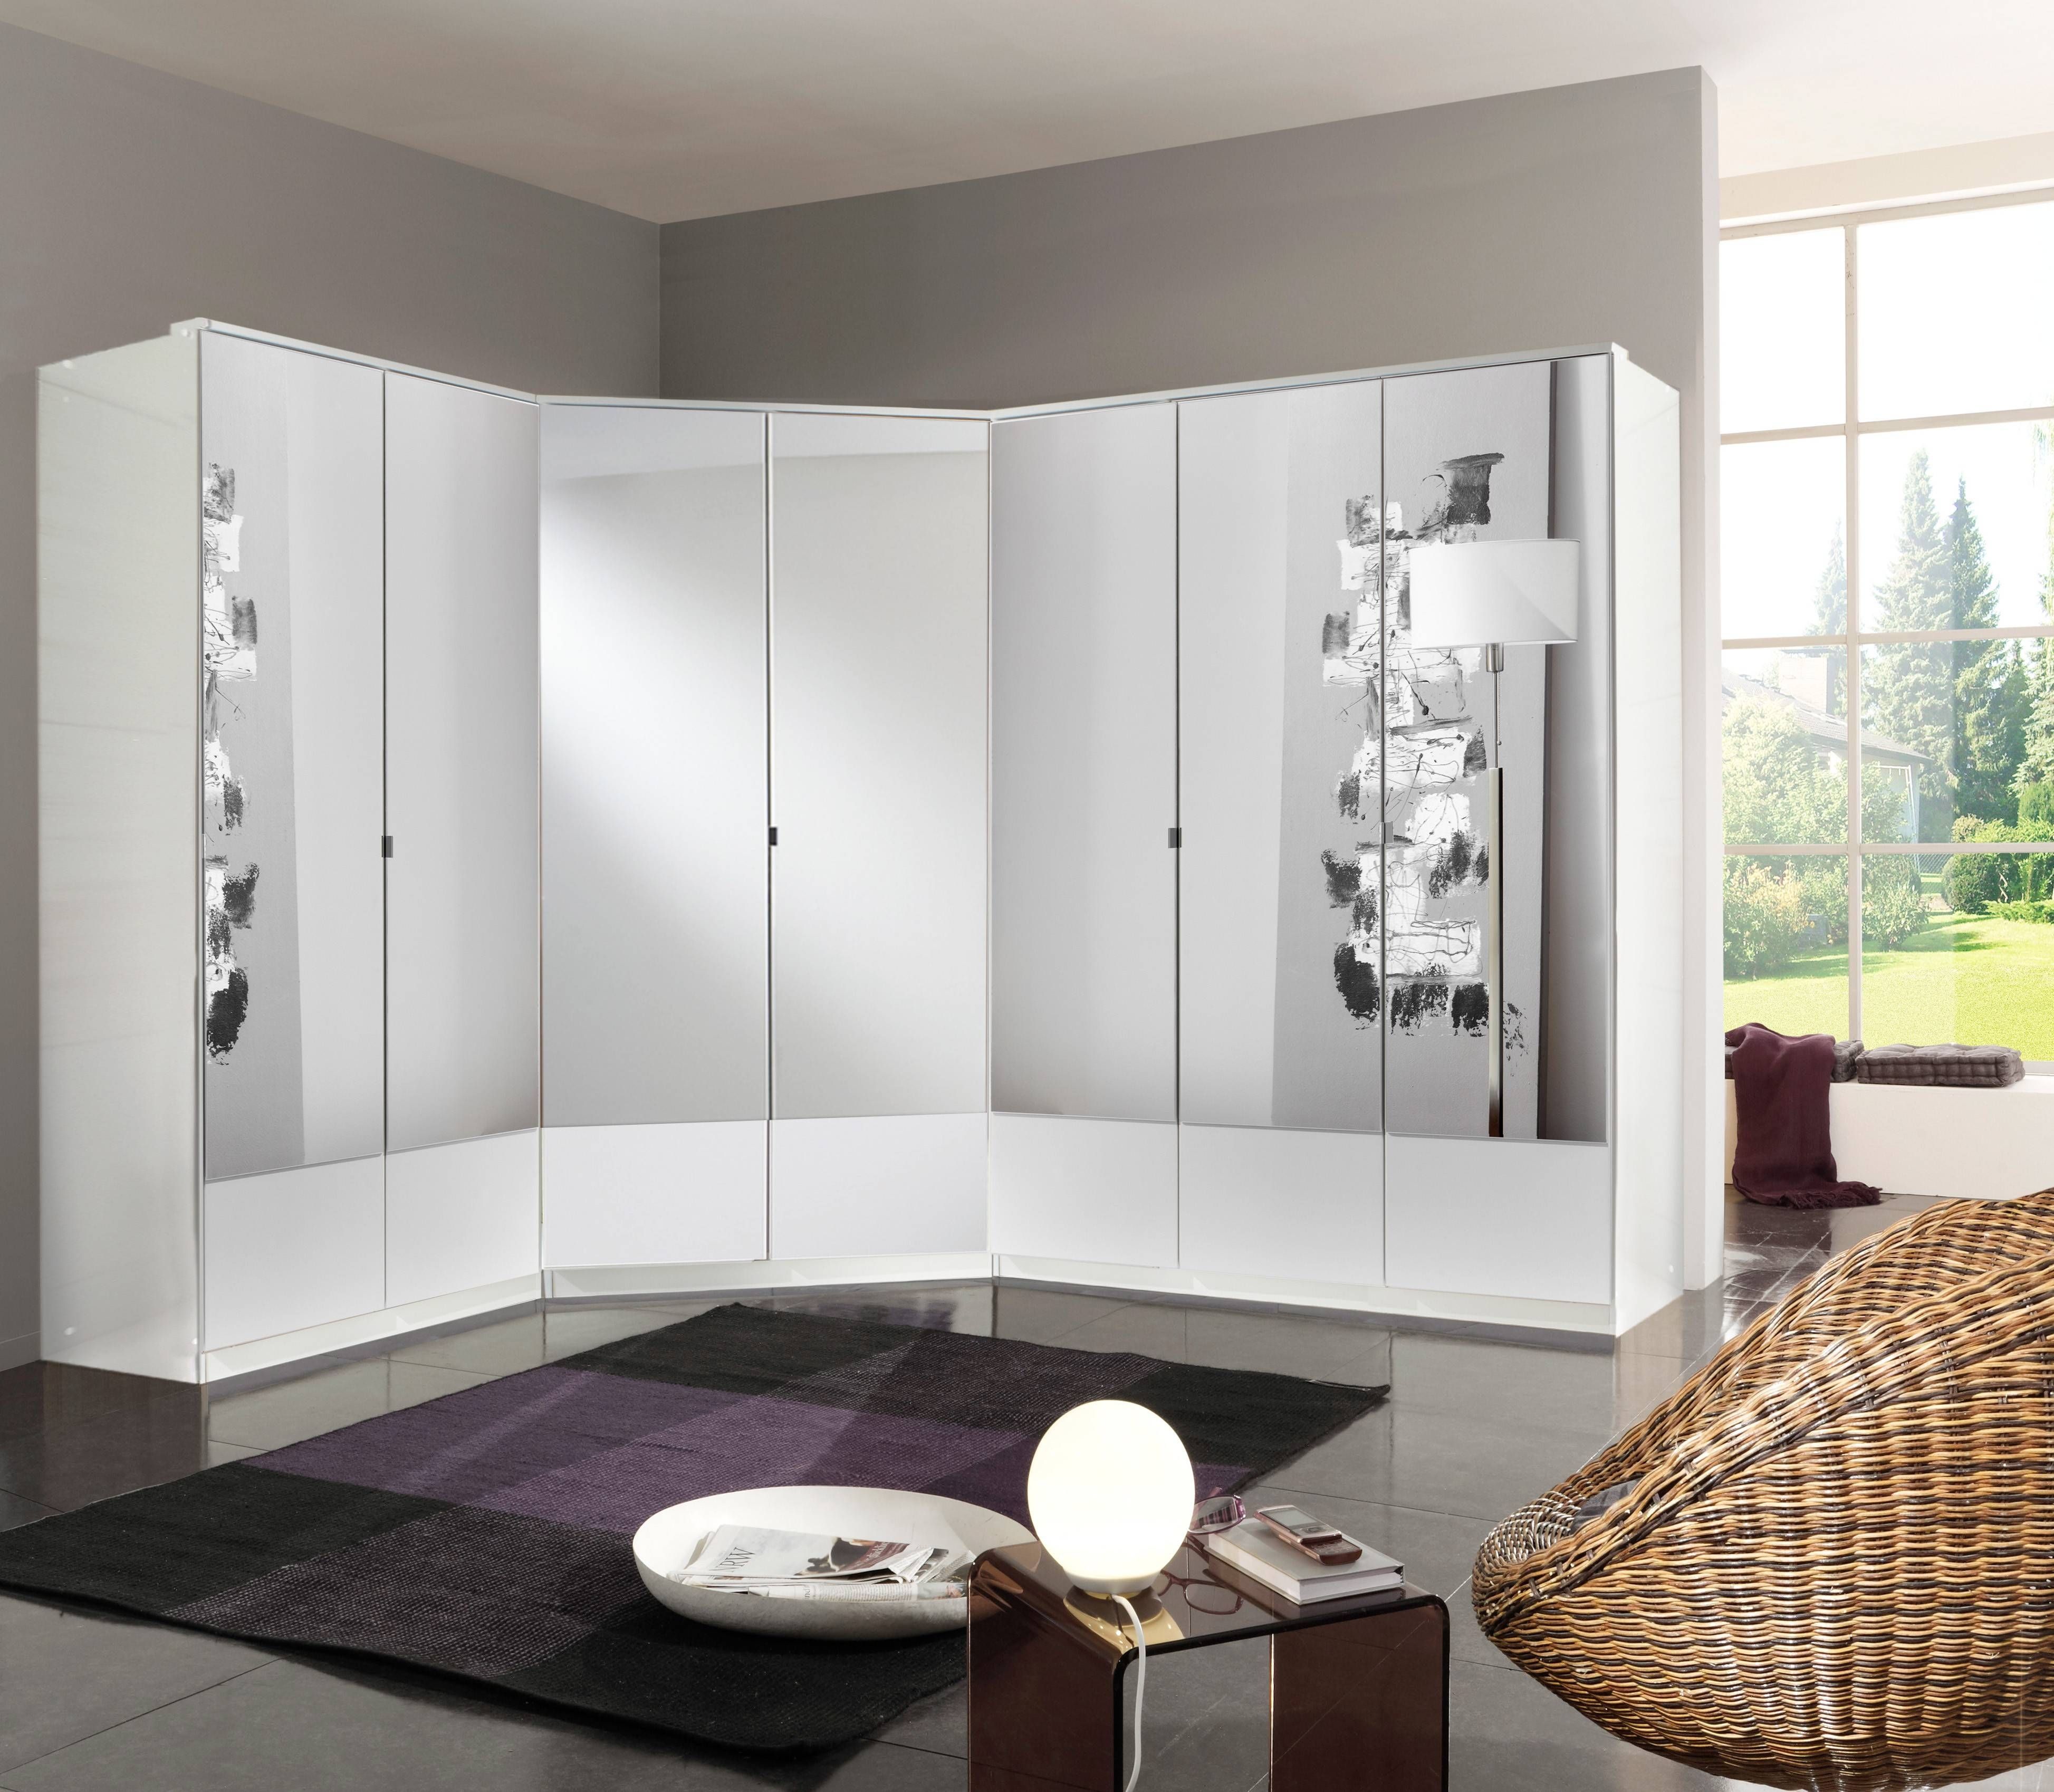 Slumberhaus 'imago' 7 Door Corner Wardrobe Fitment With White And Regarding Corner Mirrored Wardrobes (View 8 of 15)